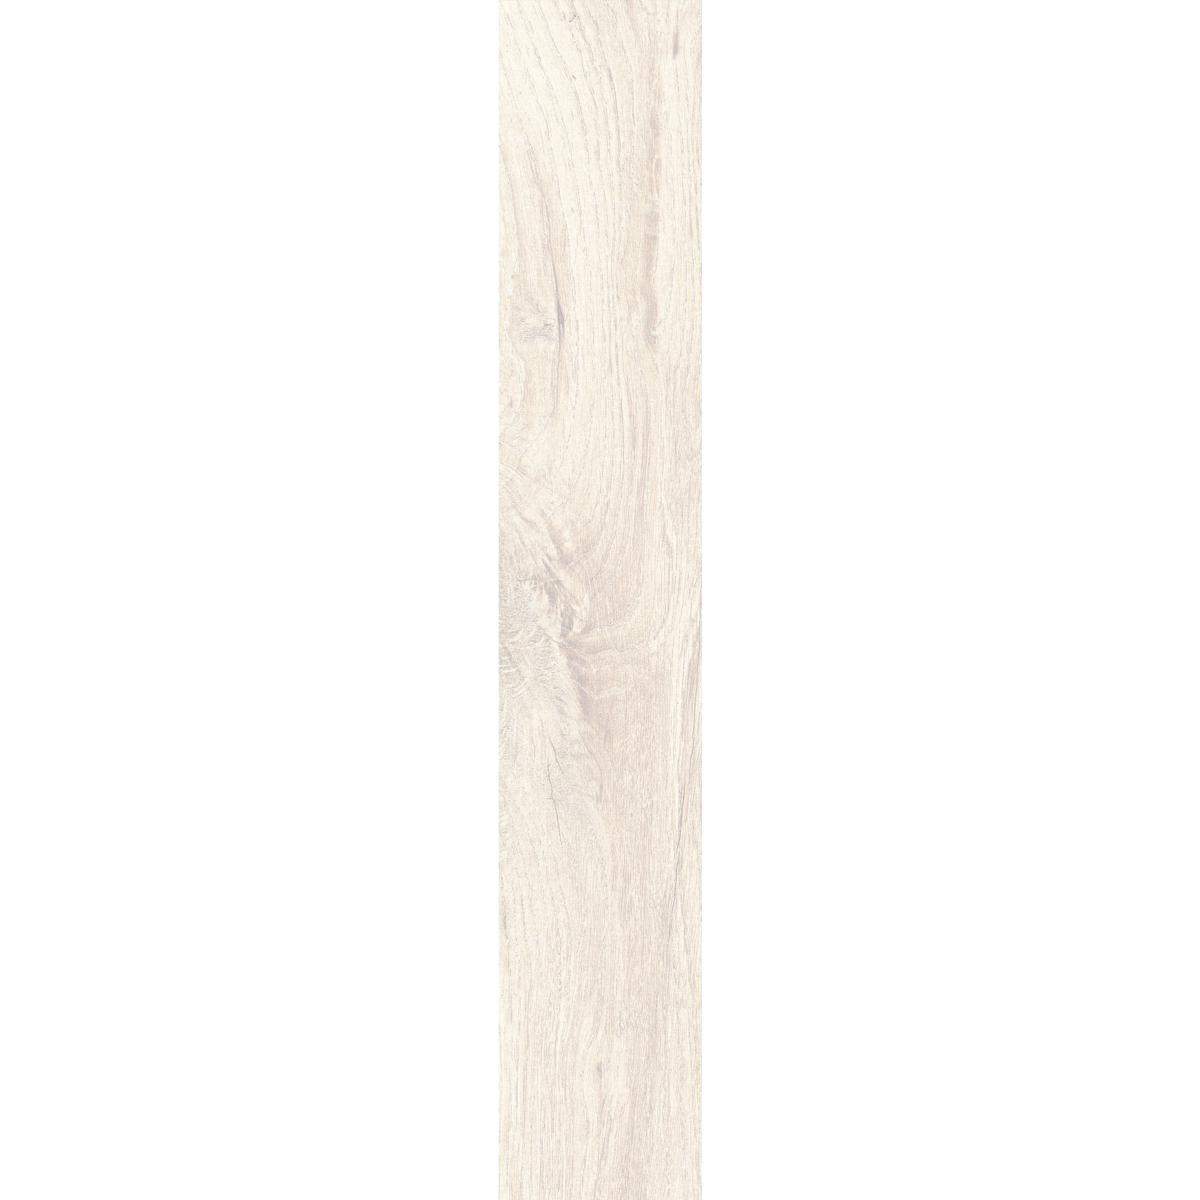 Rondine Living Bianco Wood Effect Porcelain Tile 7.5x45cm